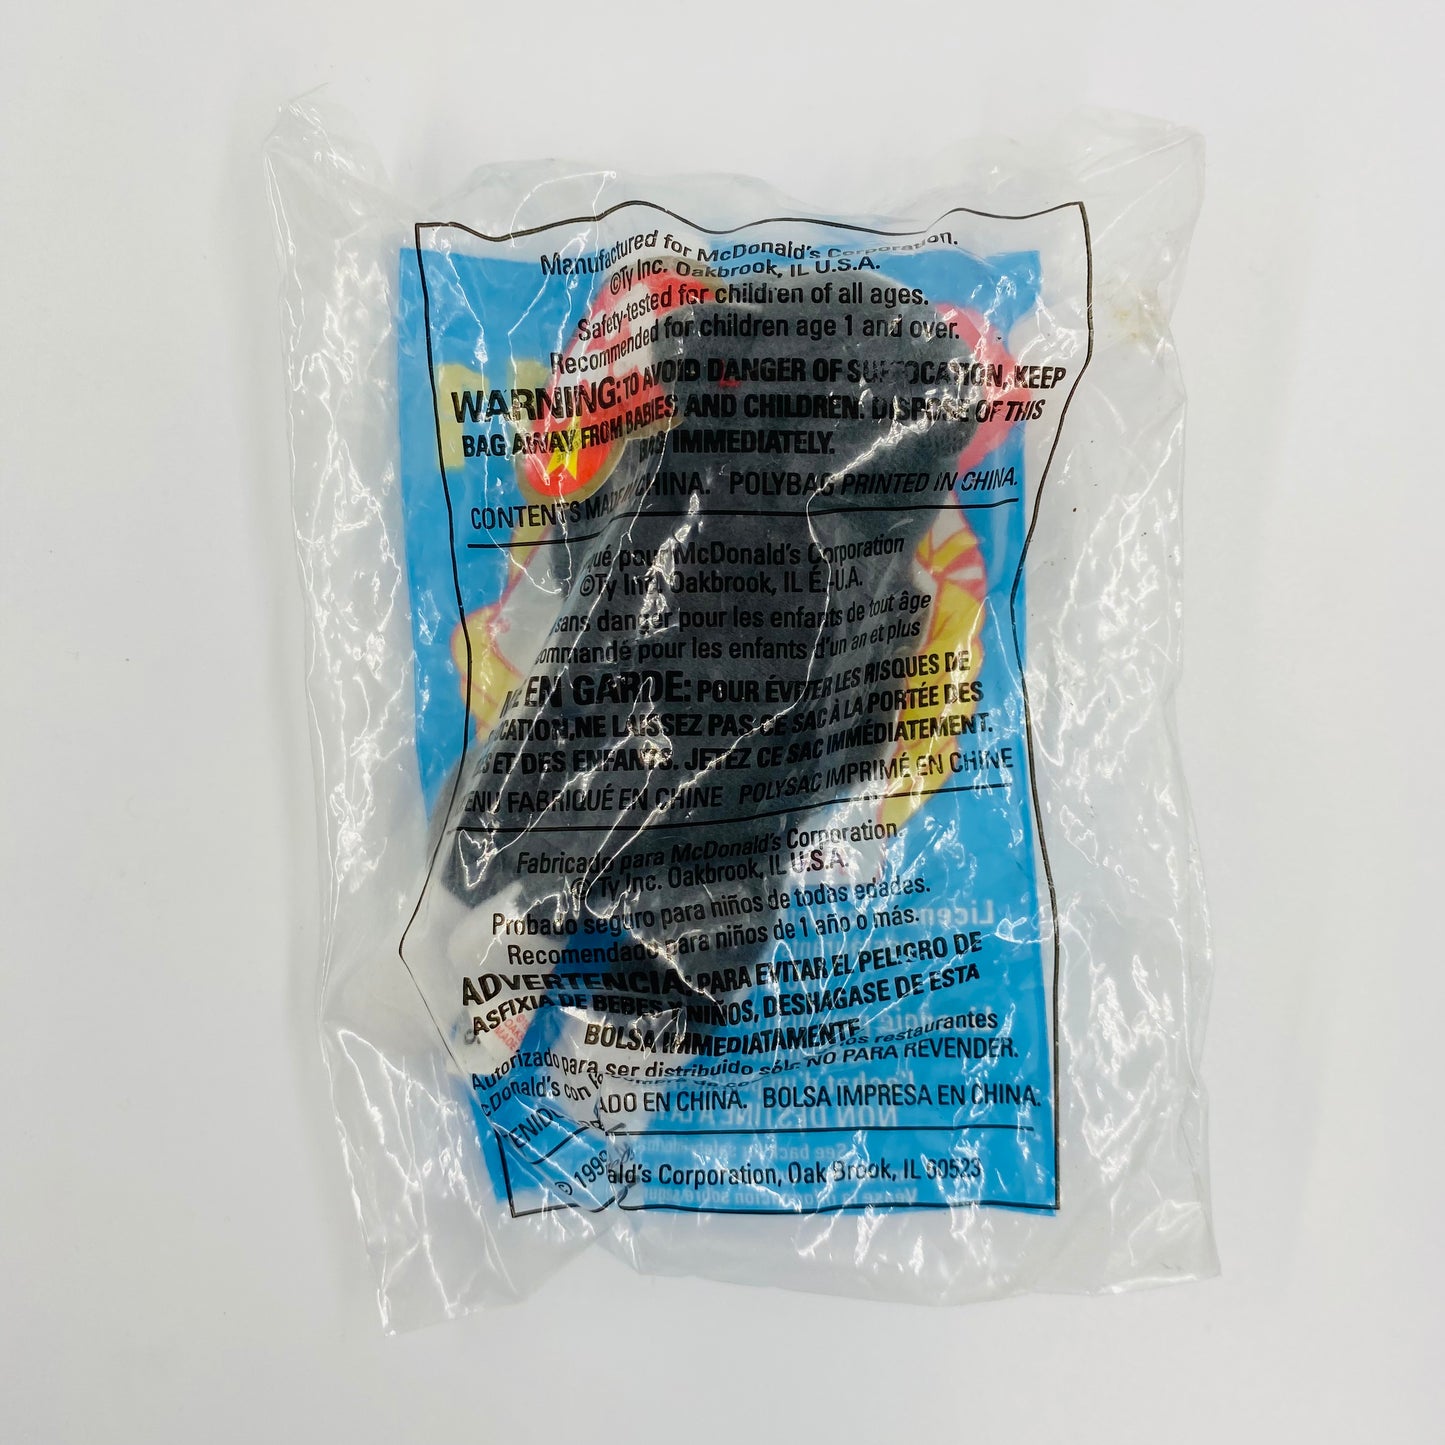 Teenie Beanie Babies ‘Nook the Husky McDonald's Happy Meal bean bag plush toy animal (1999) bagged